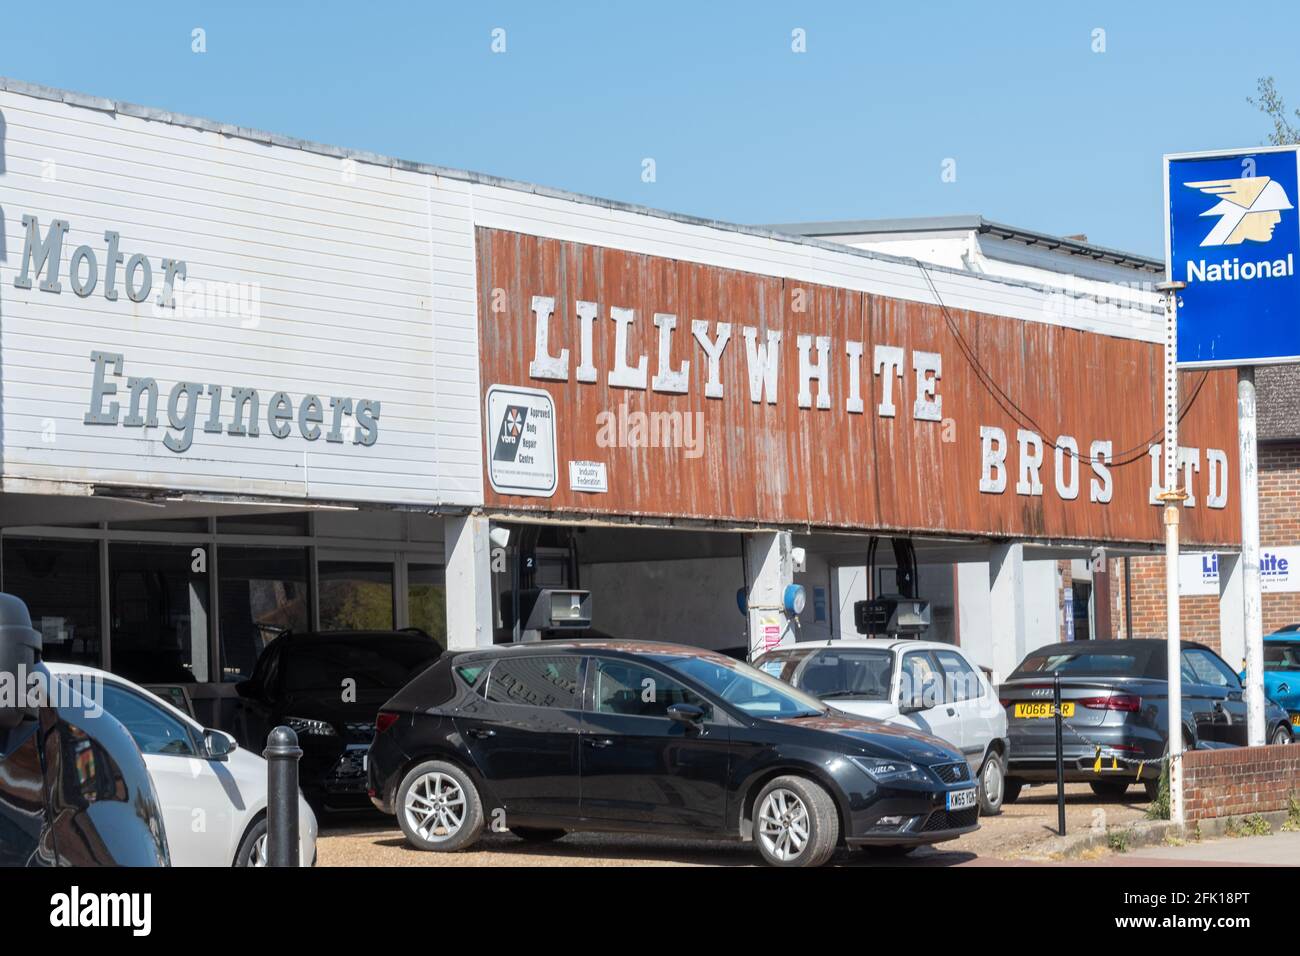 Petite entreprise familiale, Lillywhite Bros Ltd Motor Engineers à Emsworth, Hampshire, Angleterre, Royaume-Uni Banque D'Images